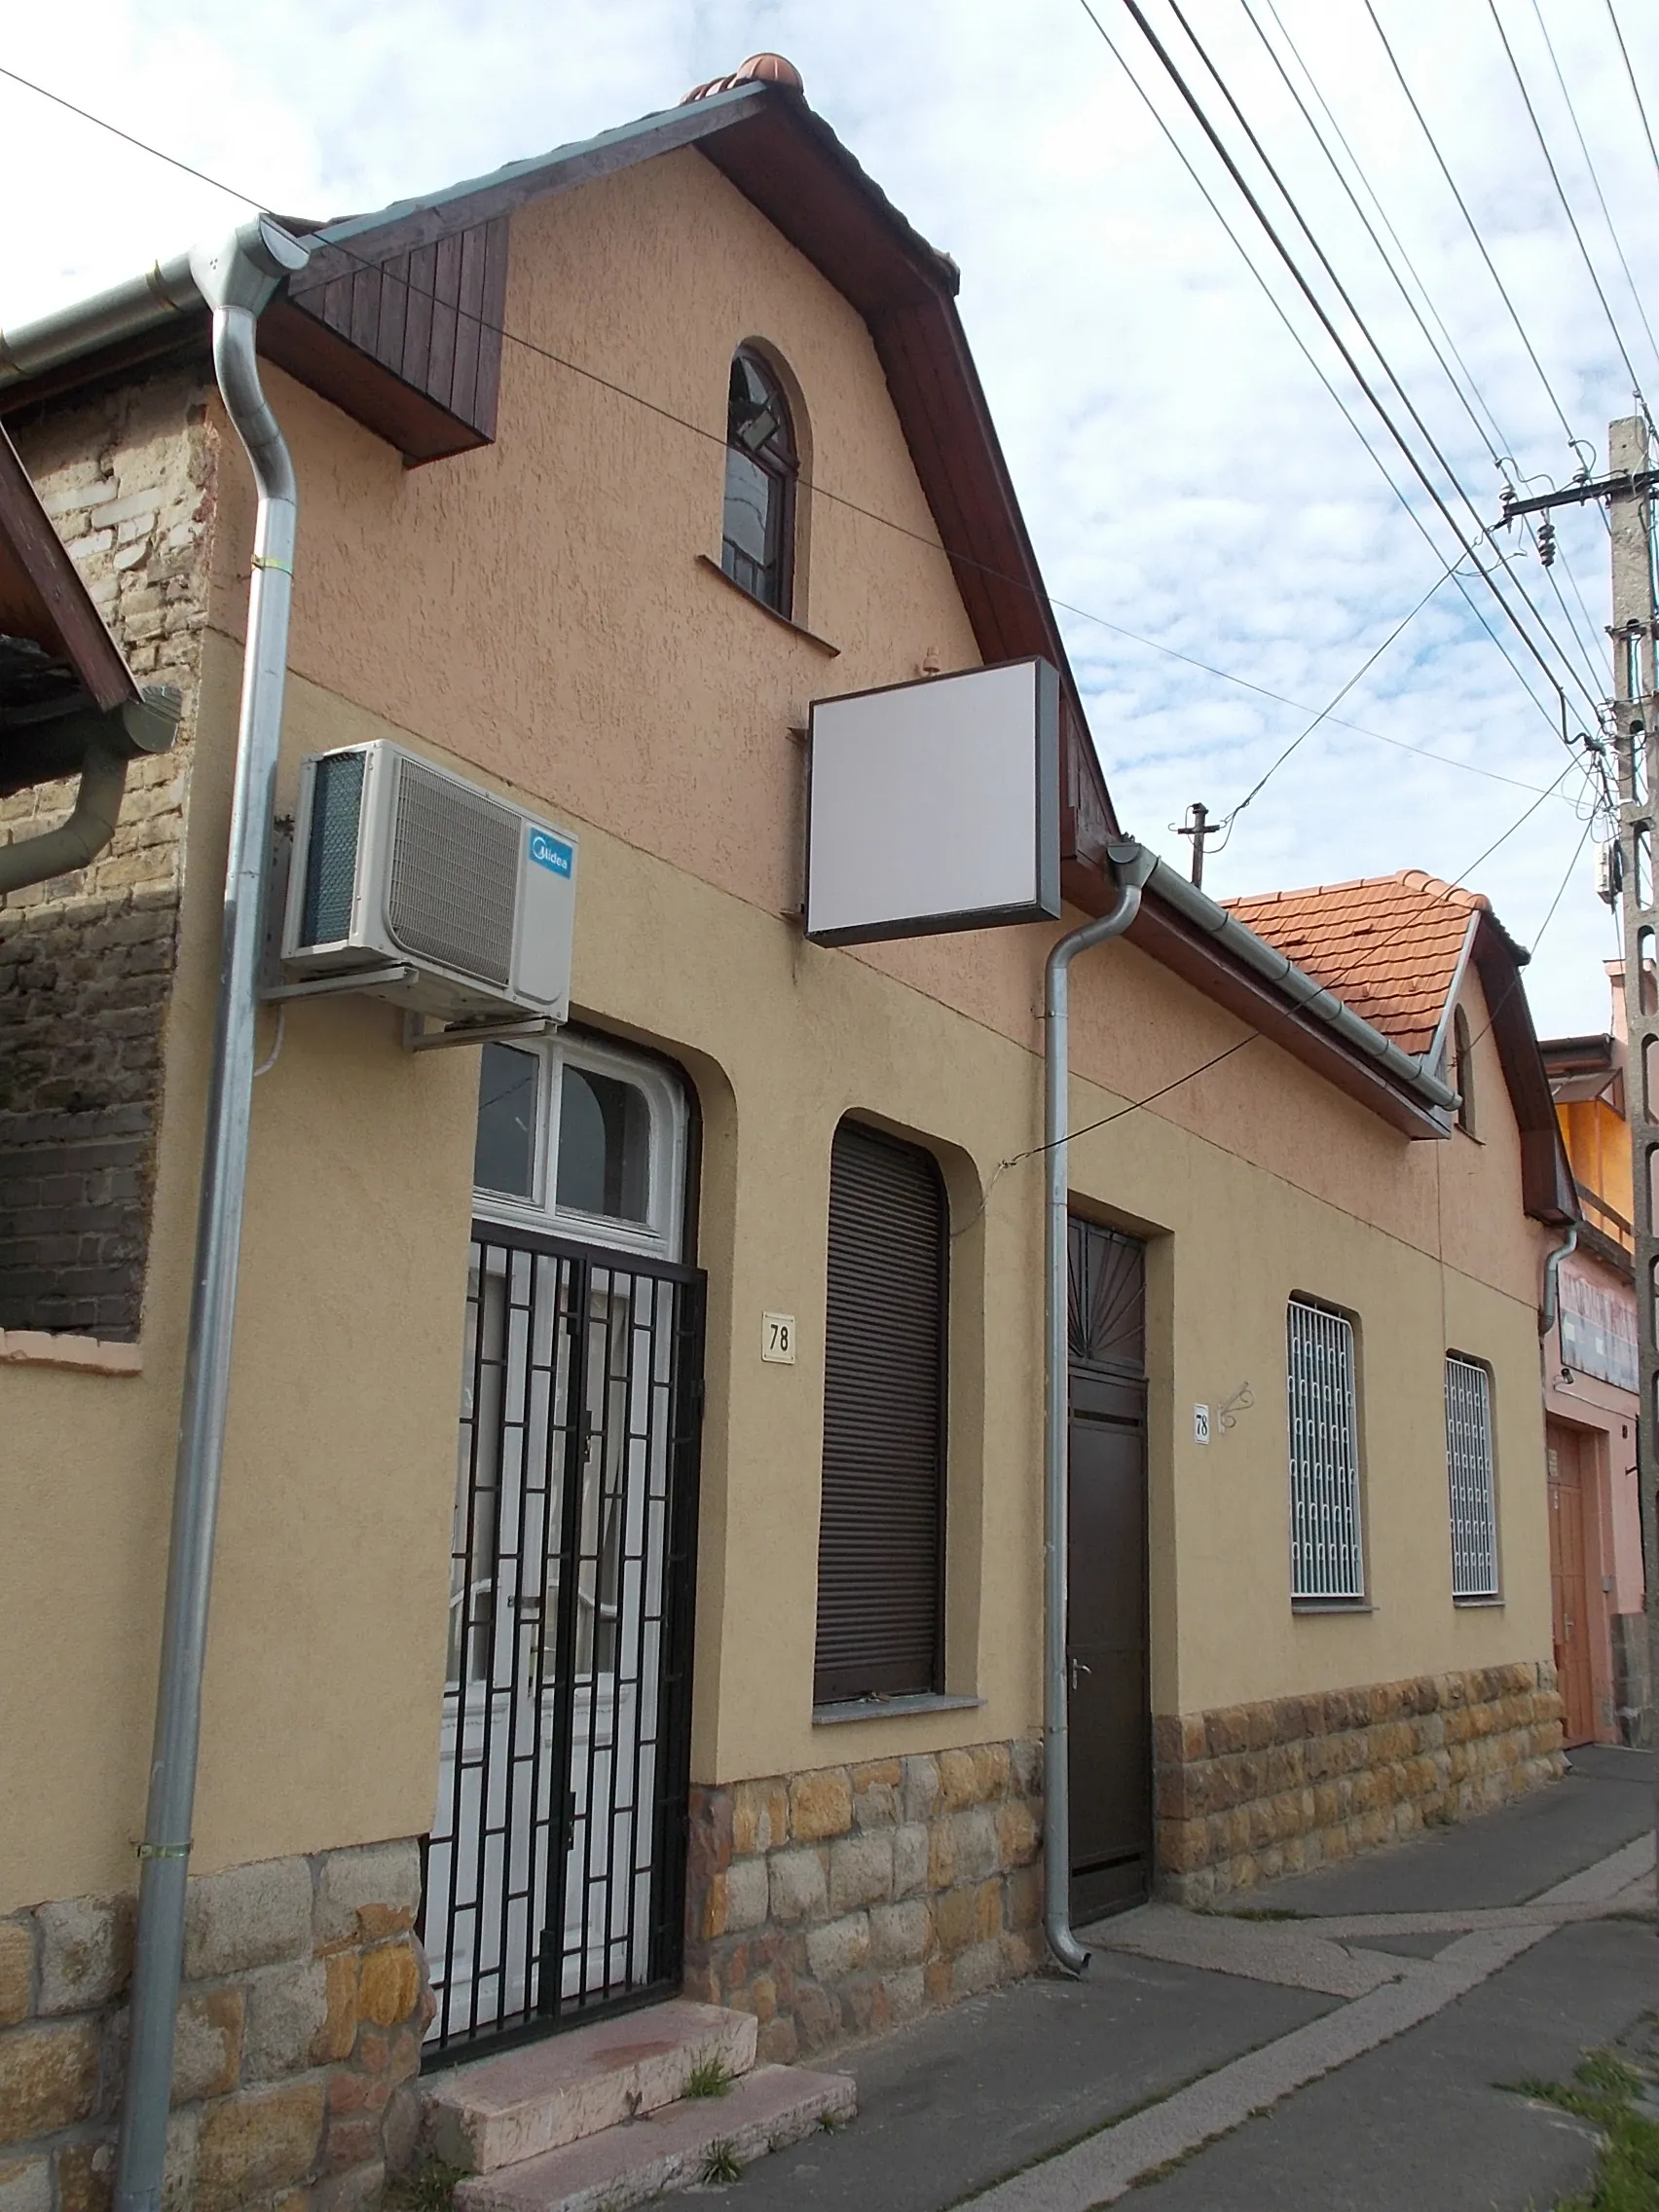 Photo showing: : Listed building - Szent Istvan Street, Dunakeszi, Pest County, Hungary.